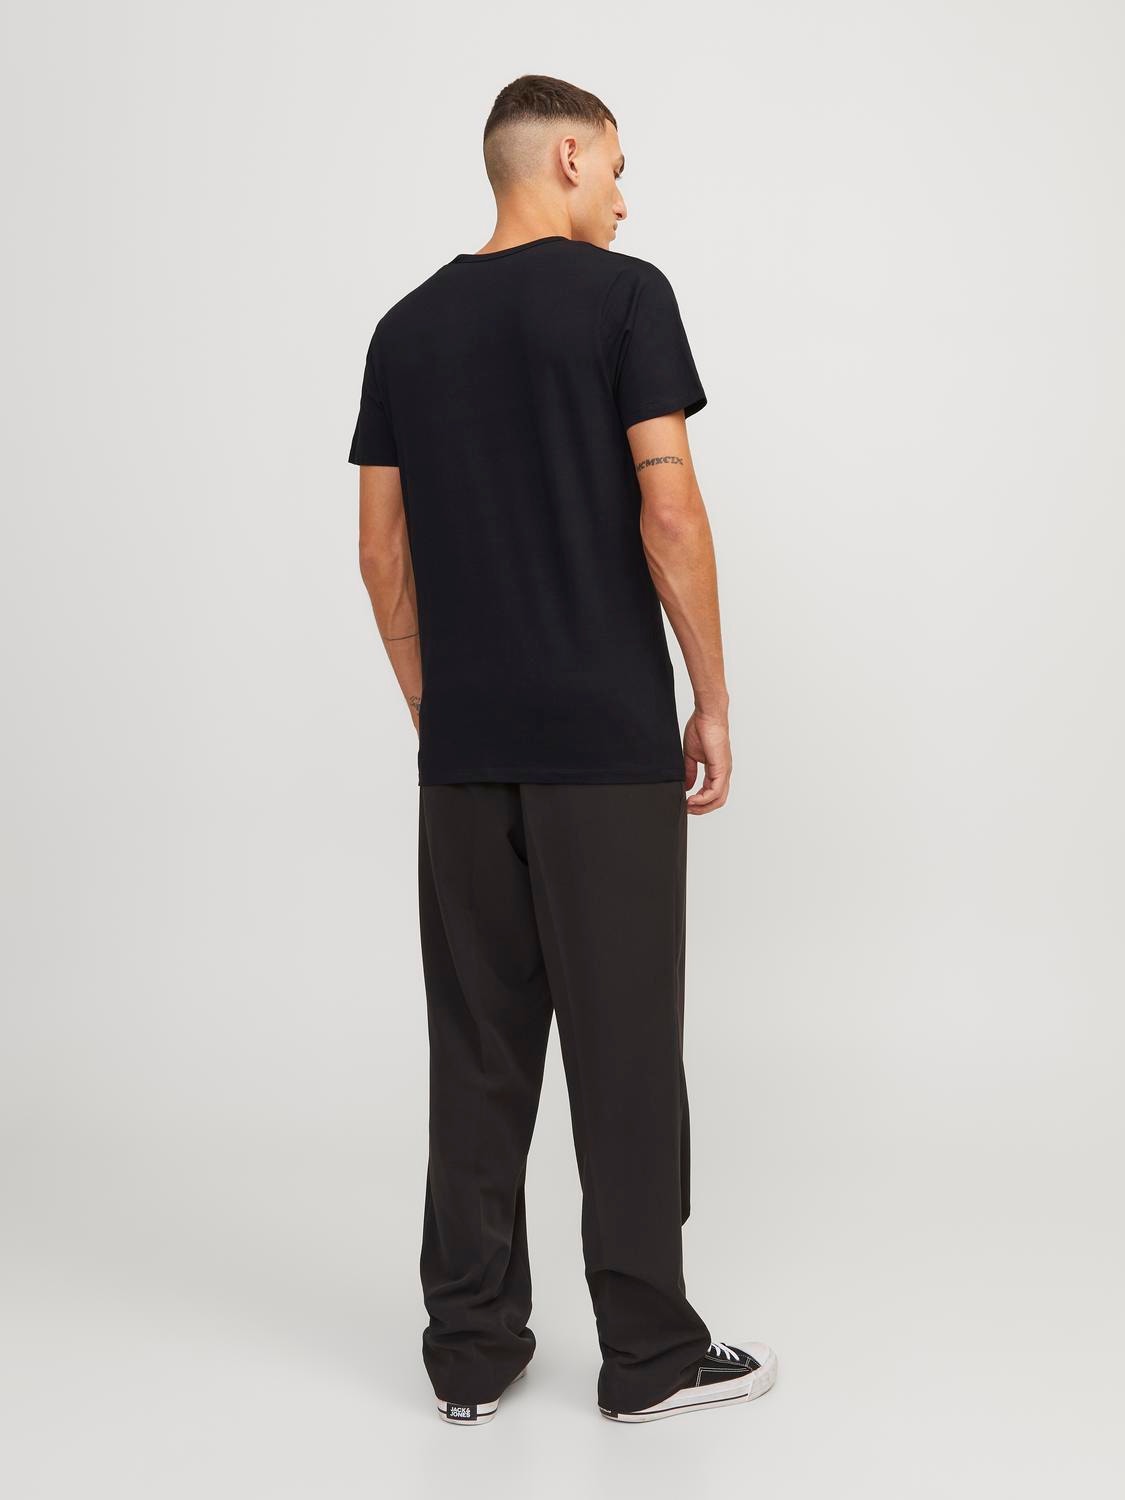 Jack & Jones T-shirt Basic Scollo a V -Black - 12059219